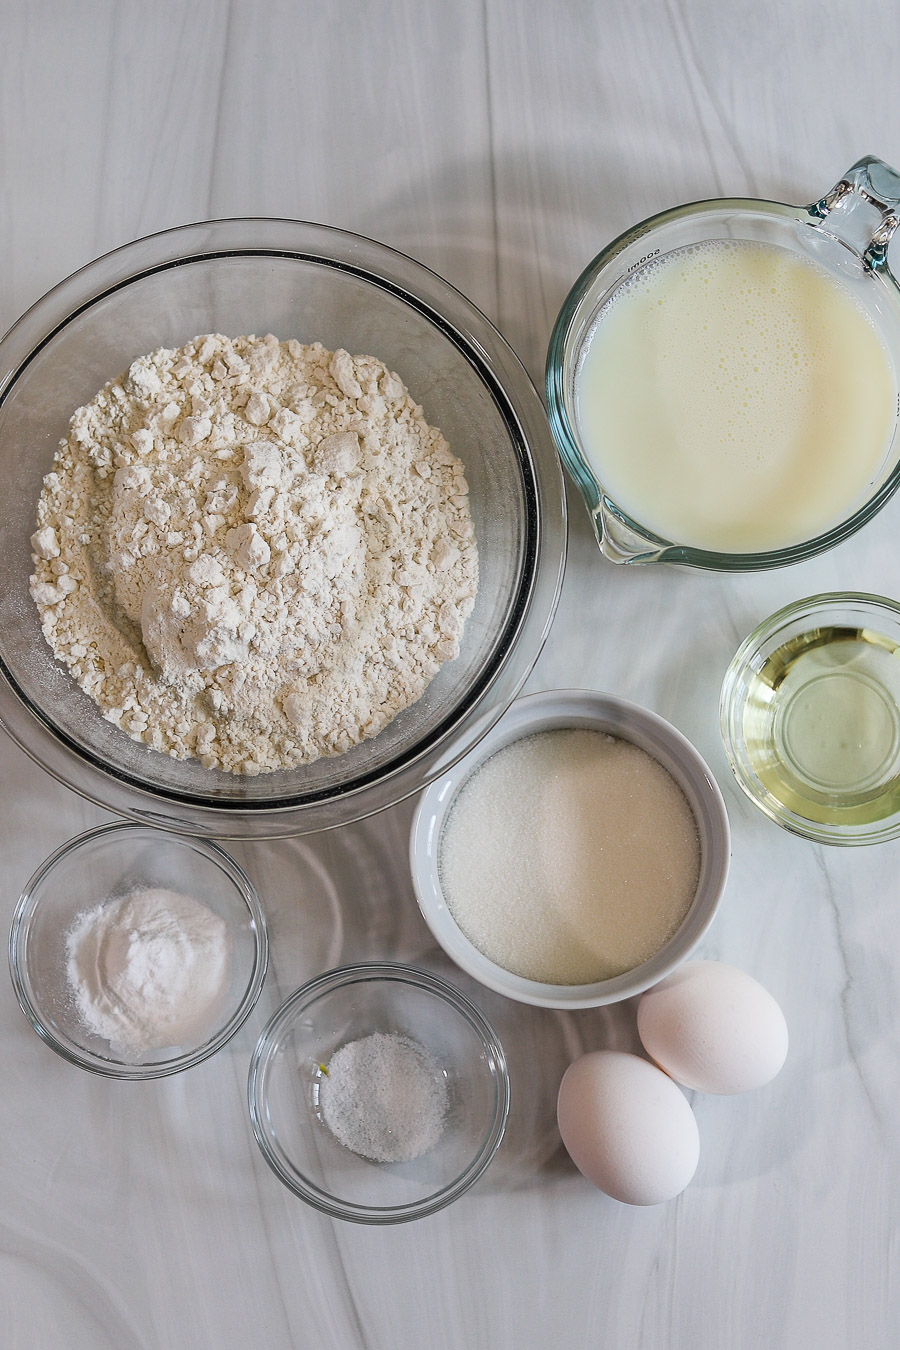 ingredients for mcdonald's copycat pancake recipe
